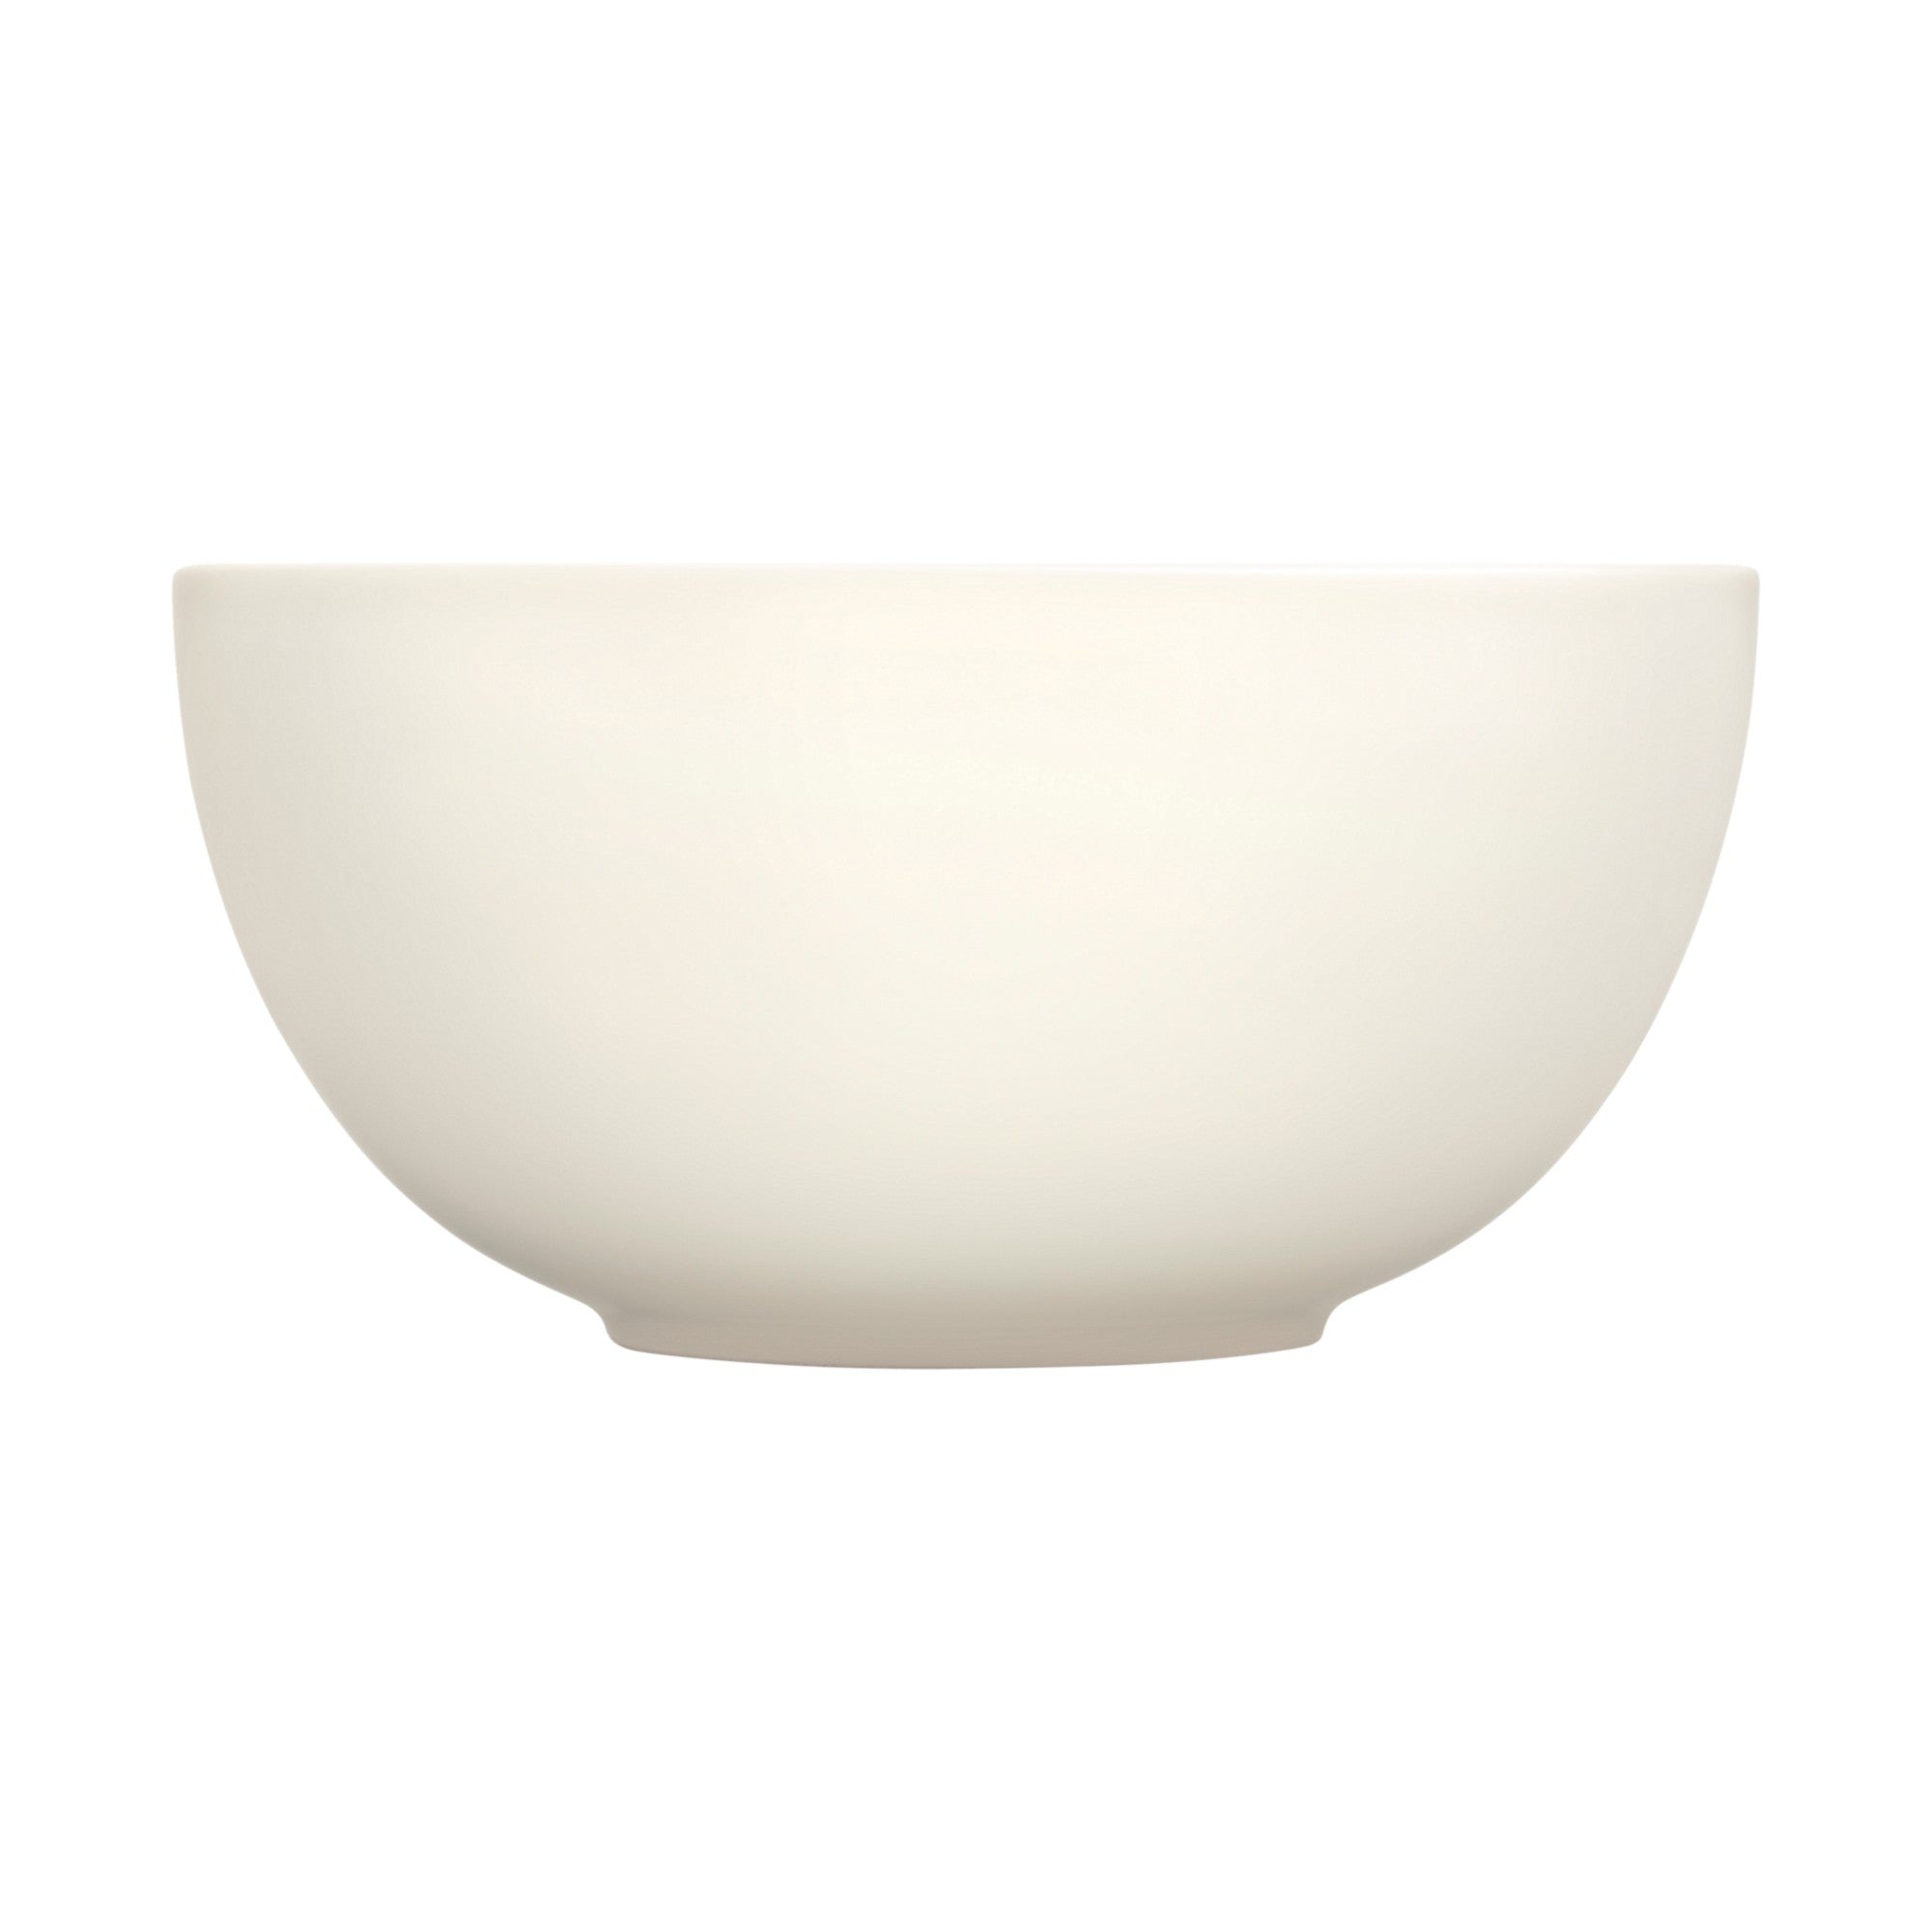 Teema serving bowl 3,4 l white